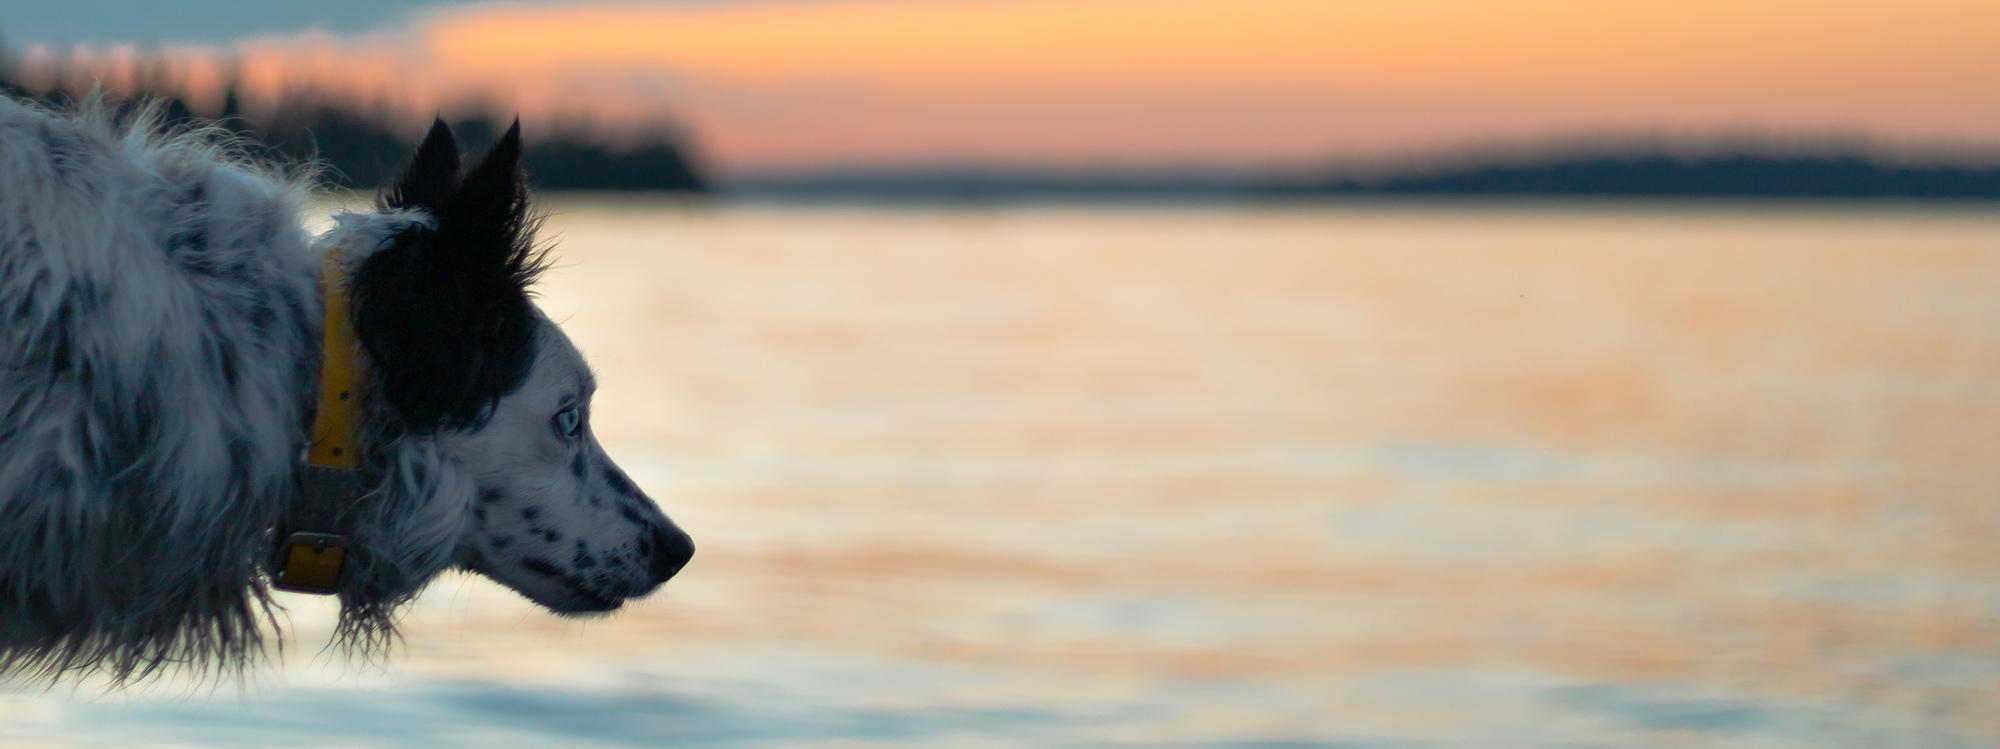 Goose control dog "Mink" looks out at Lake Washington